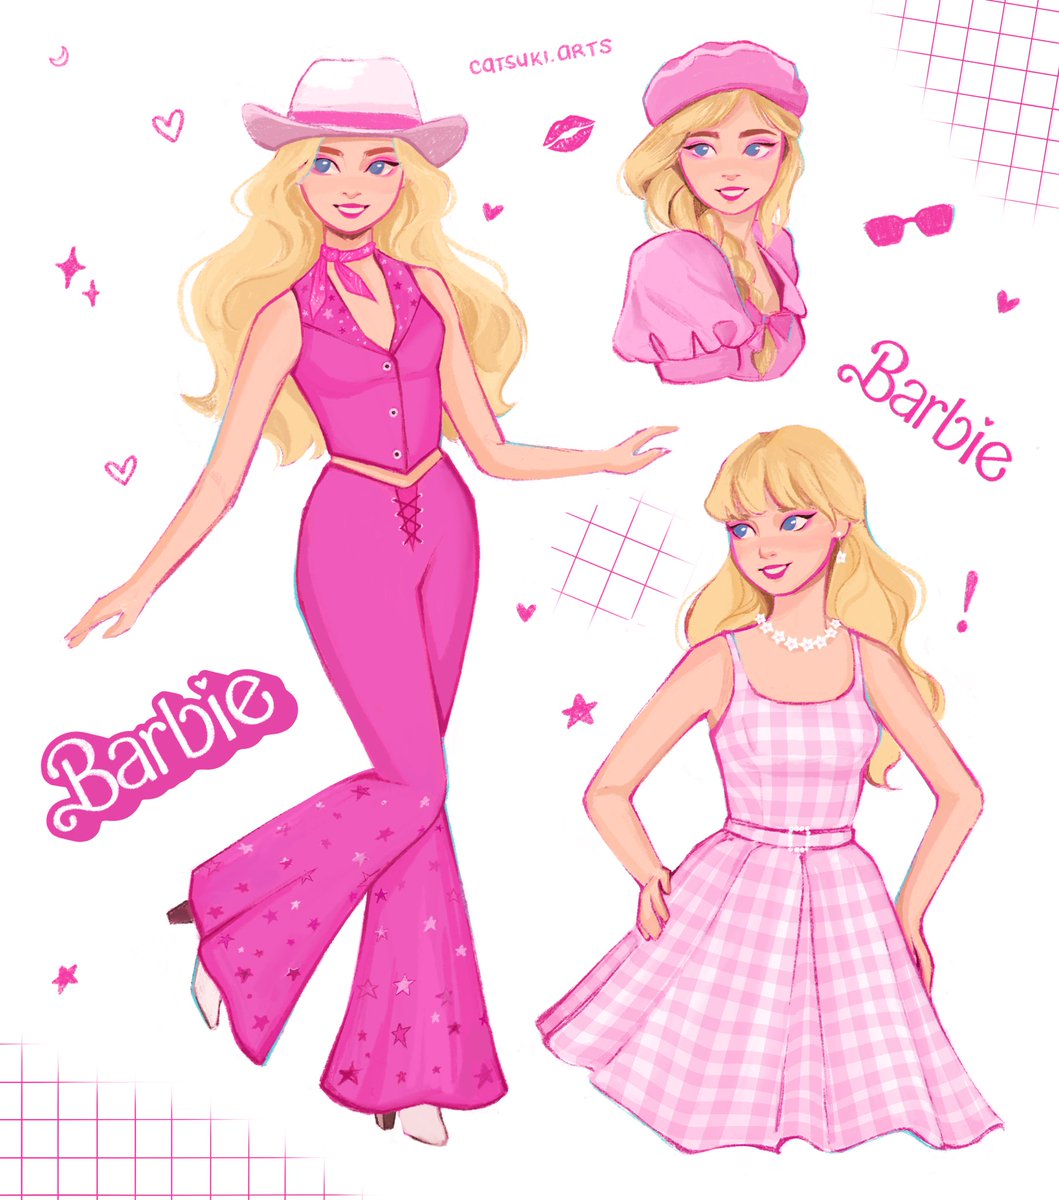 She’s everything ✨ #Barbie #BarbieMovie